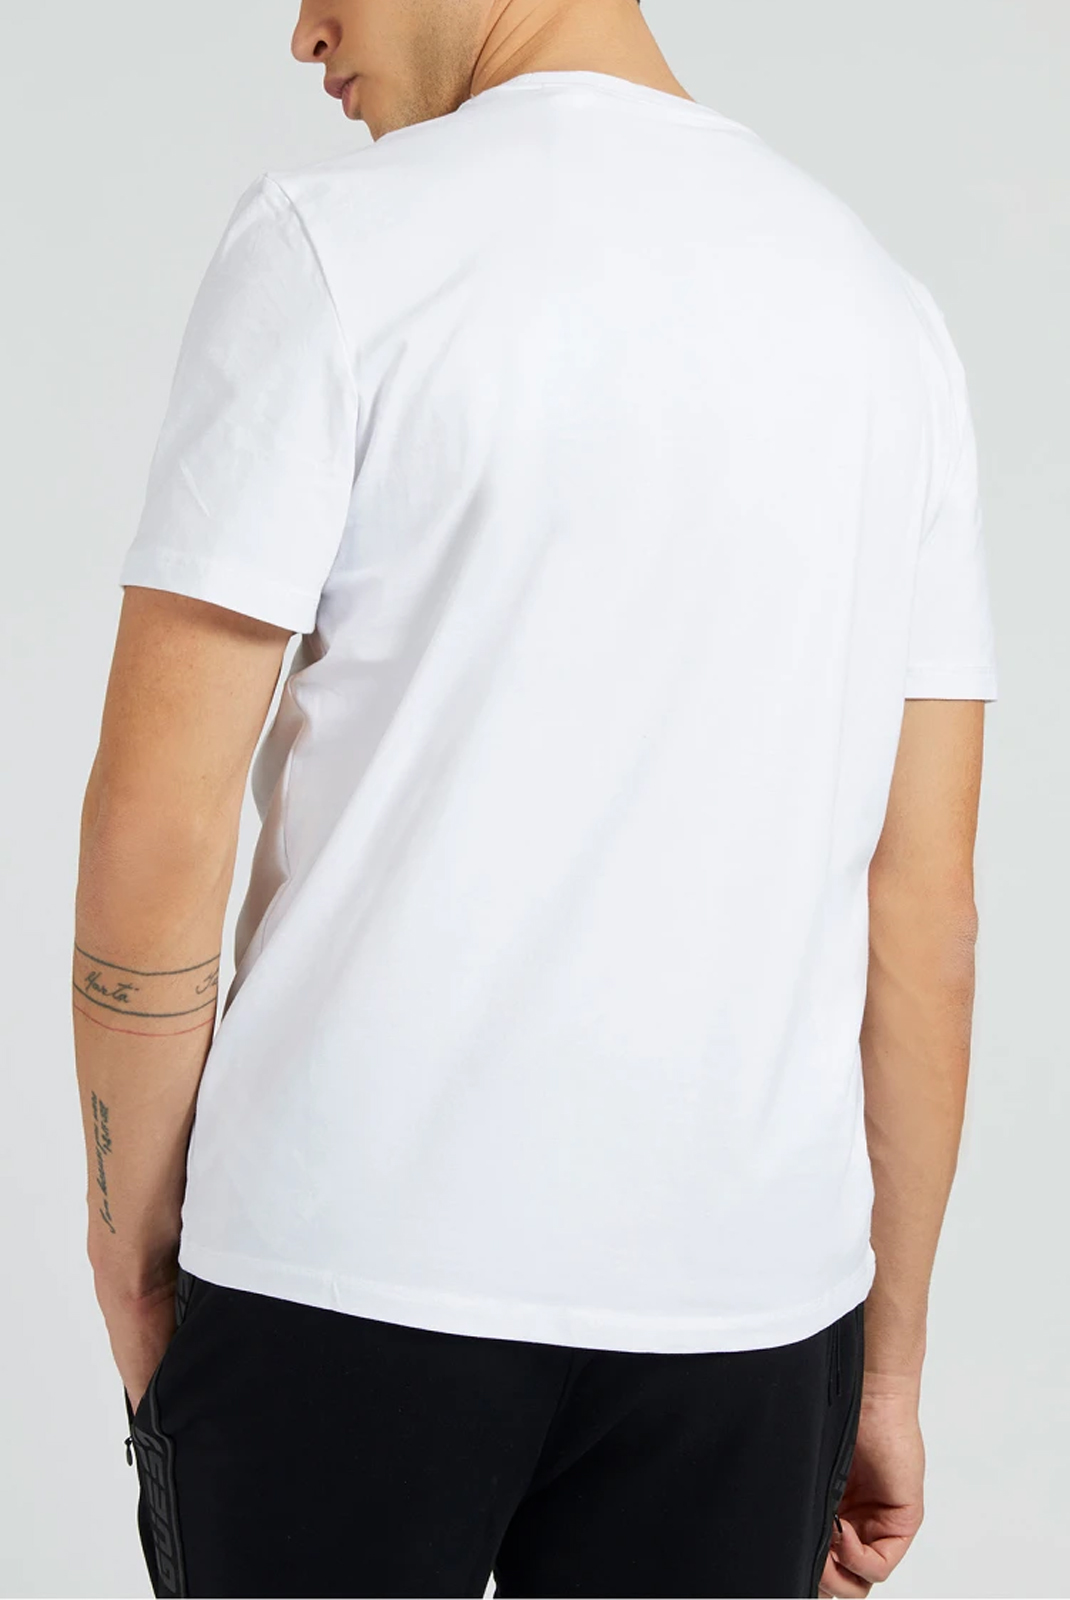 Tee-shirt blanc Guess homme - U1ga23